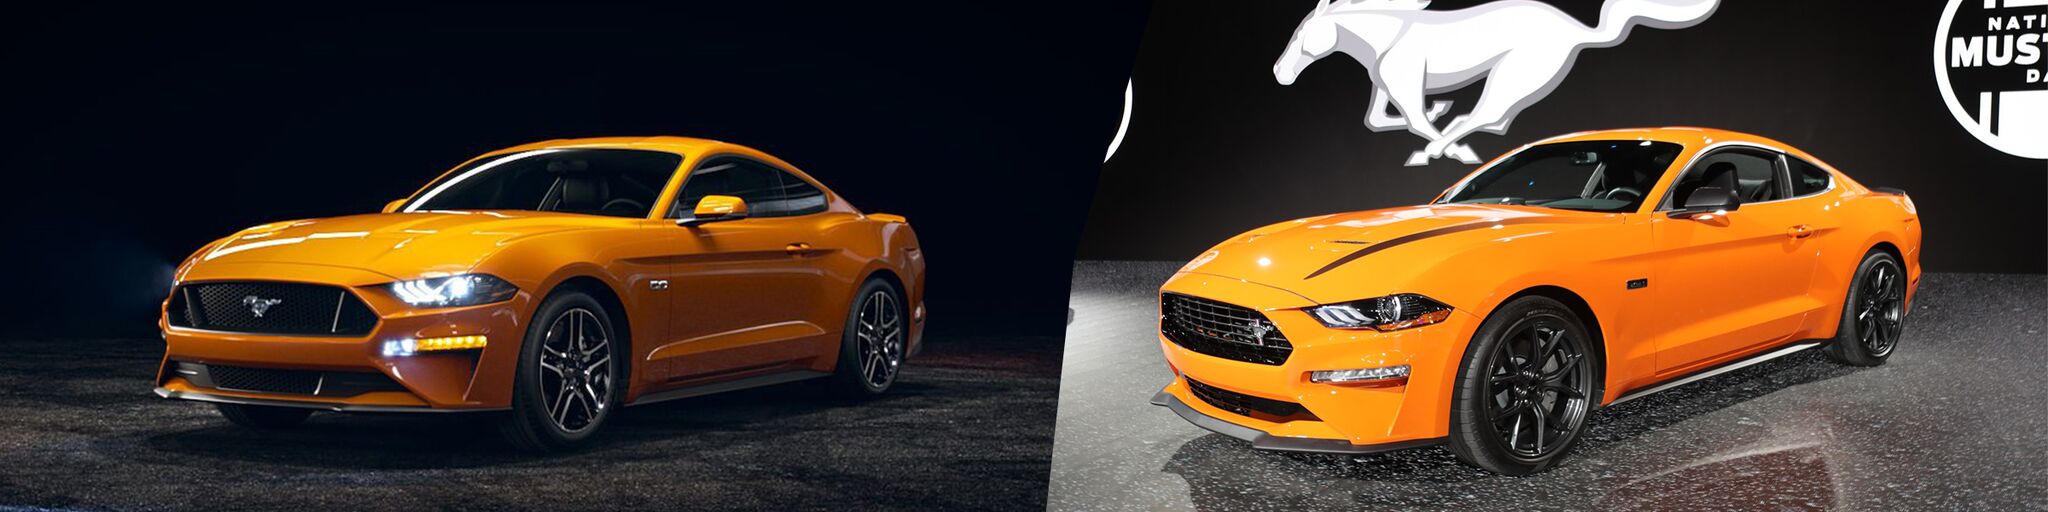 2019 Vs 2020 | Ford Mustang - 2019 Vs 2020 | Ford Mustang